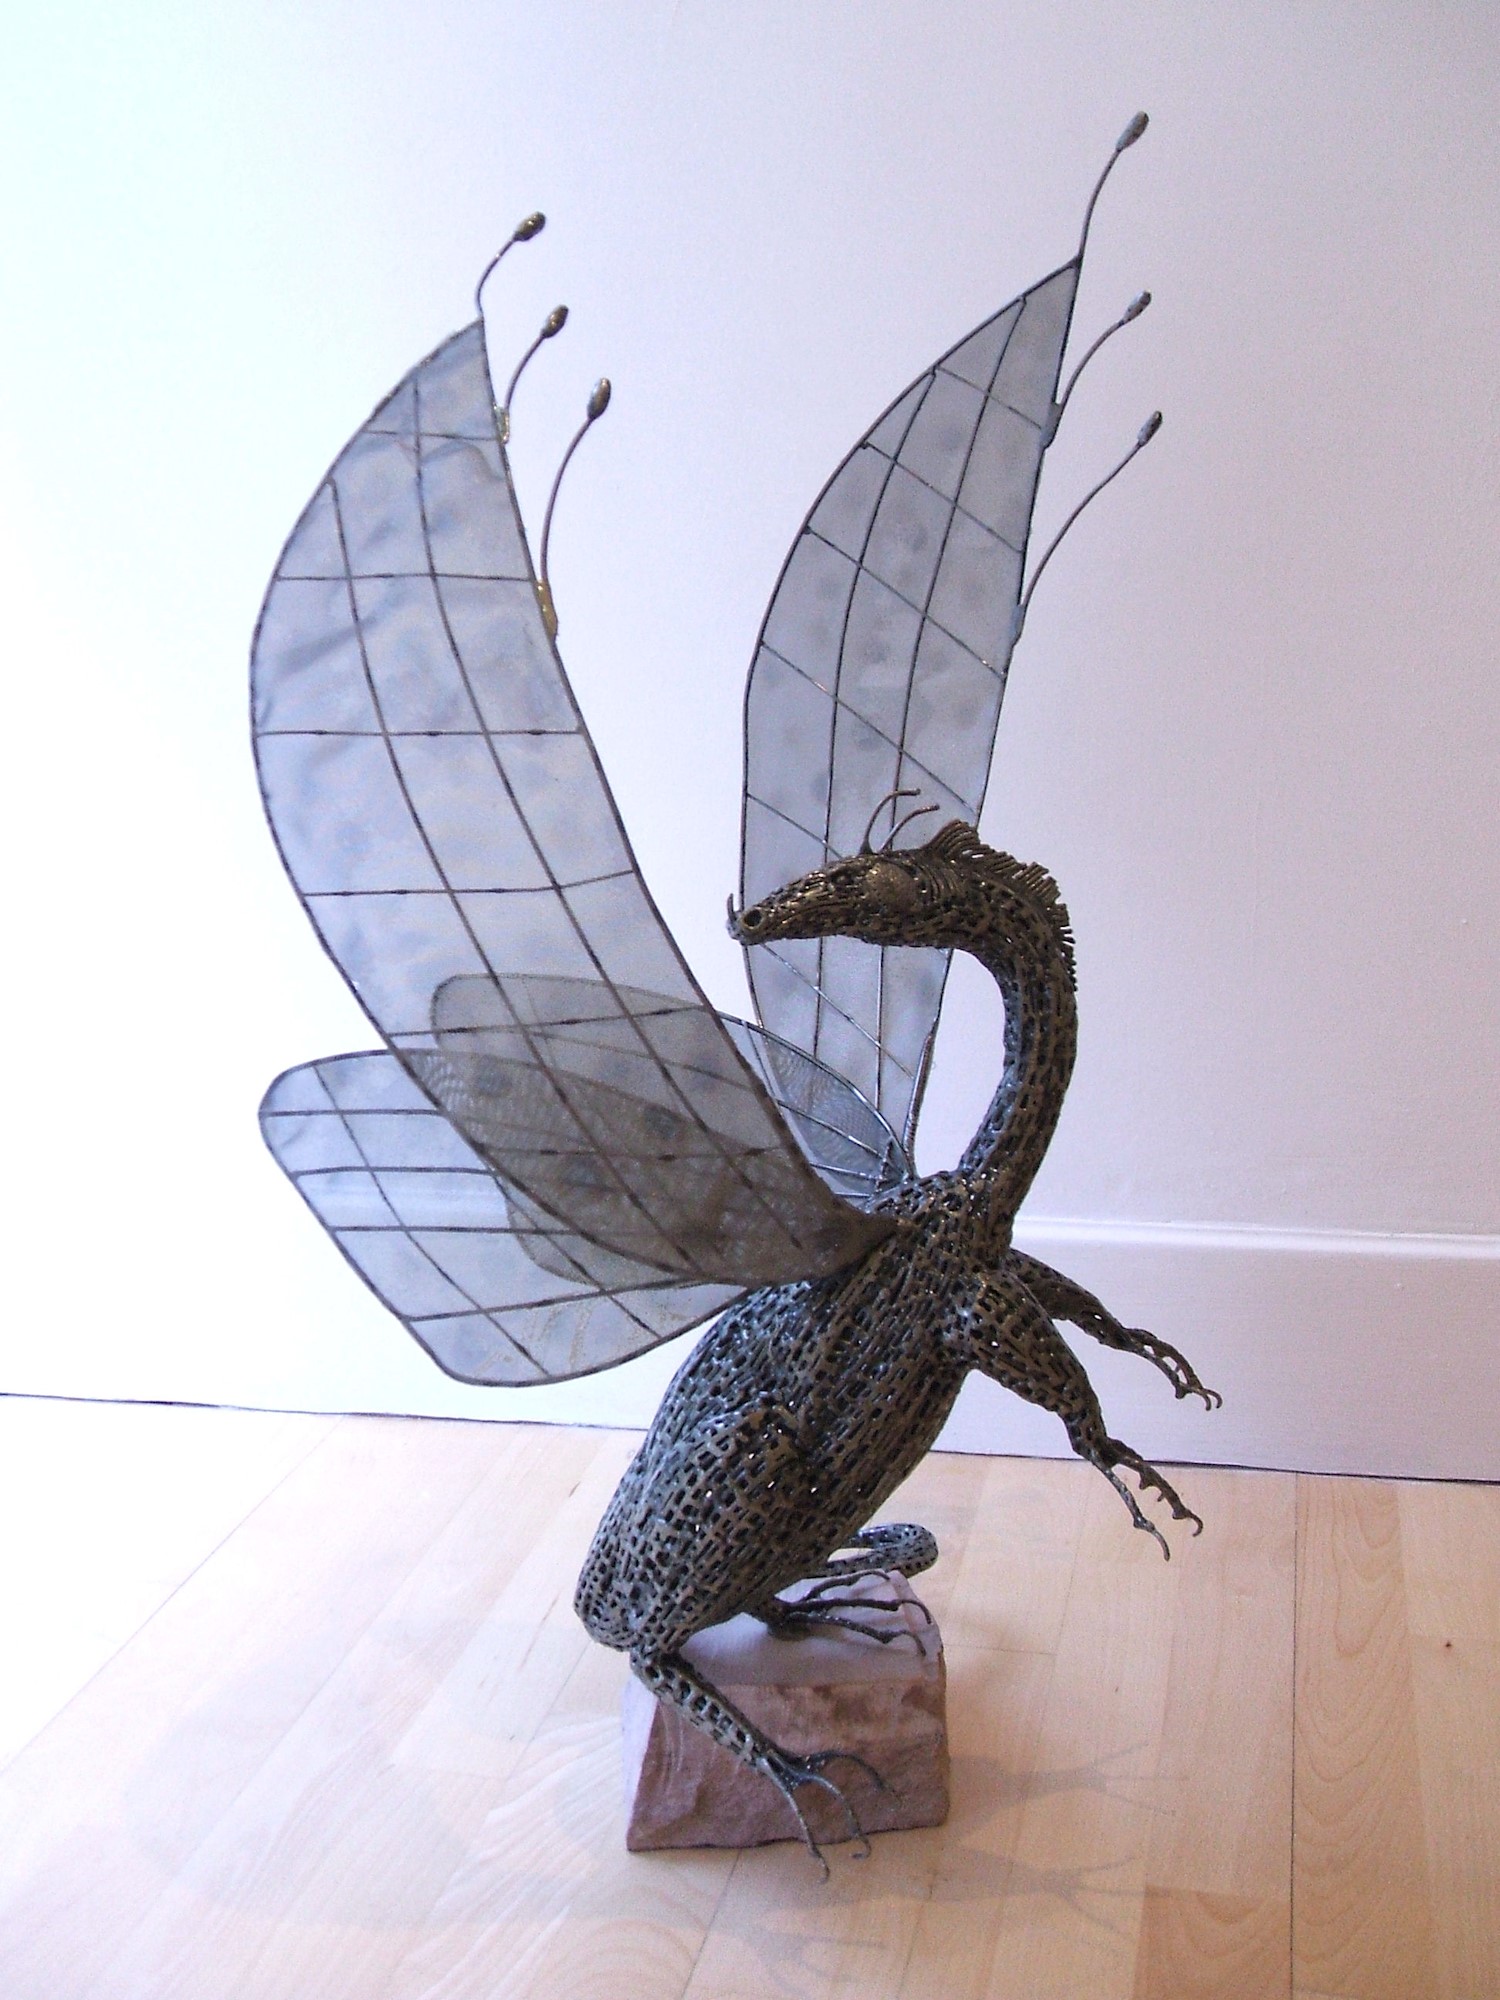 'Dragon' by artist Hamish Gilchrist